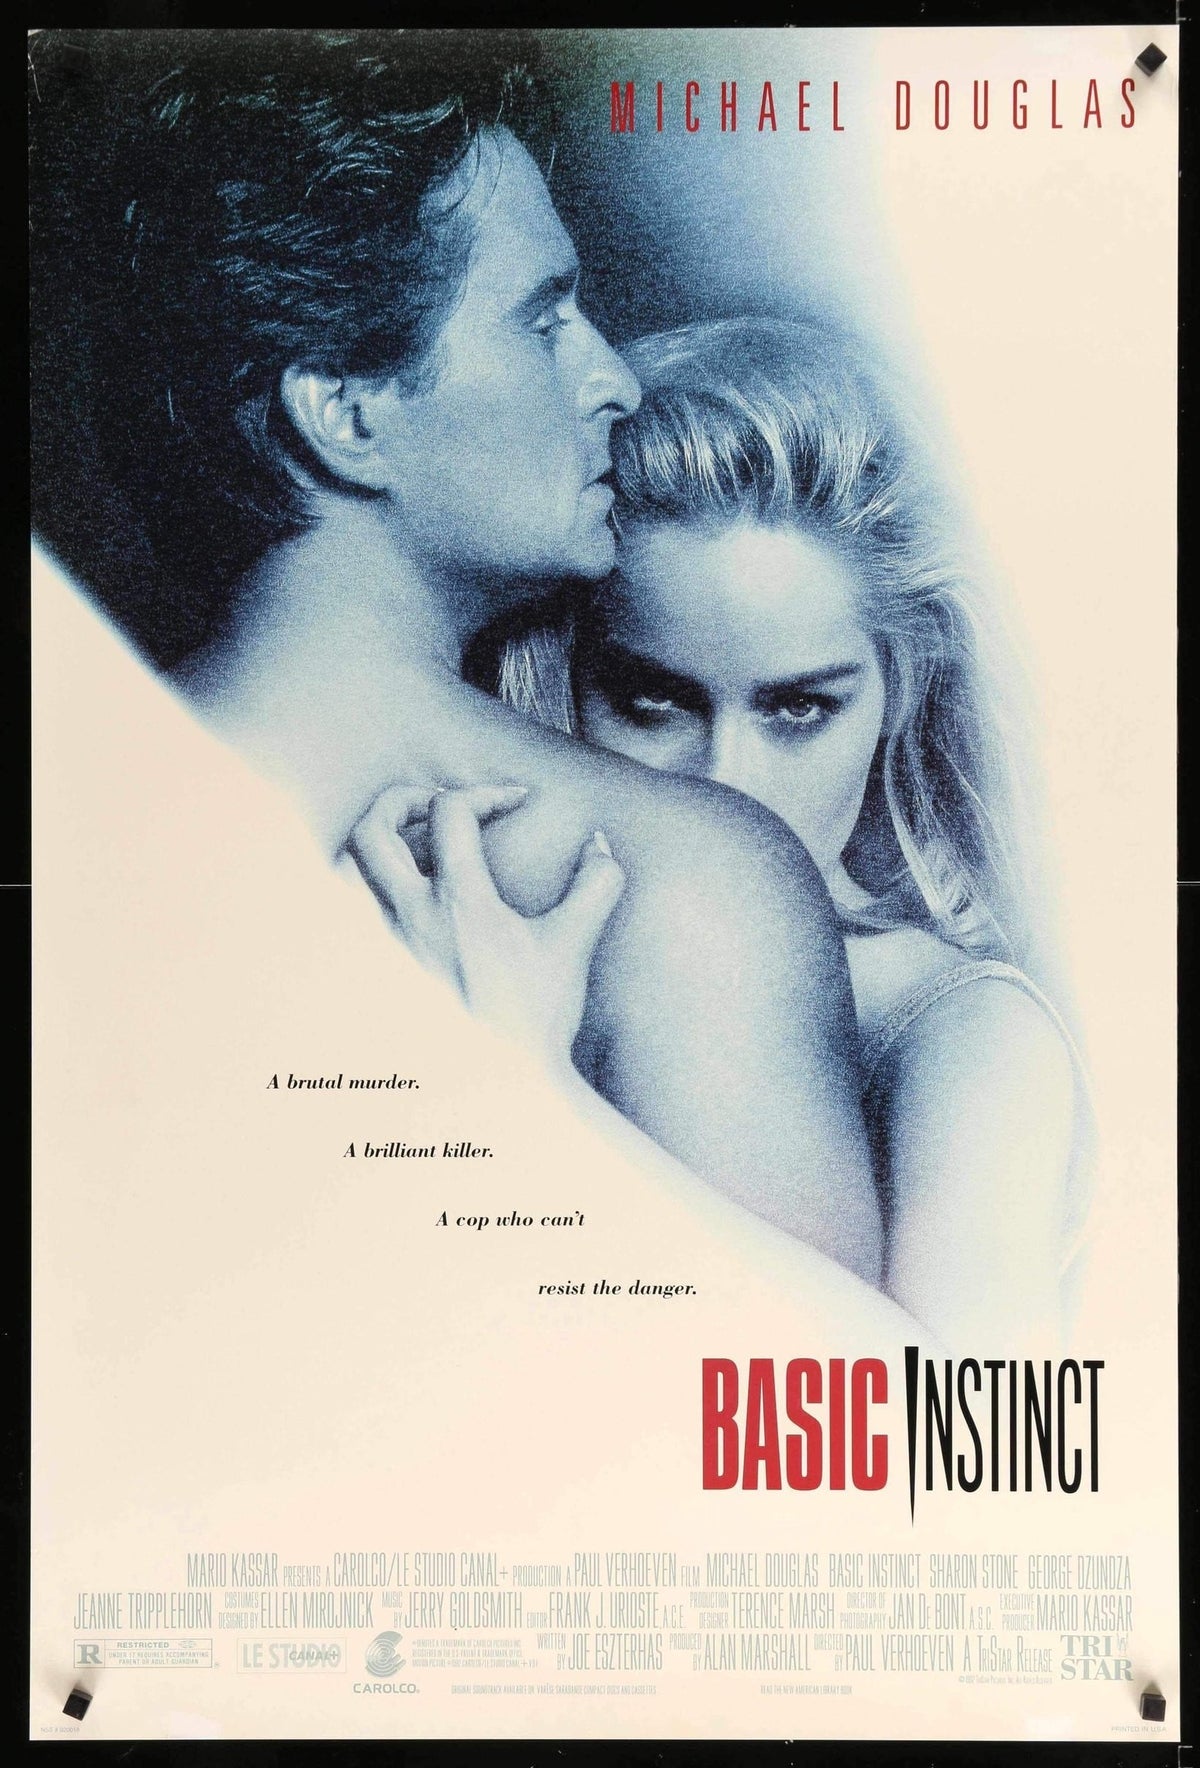 Basic Instinct (1992) original movie poster for sale at Original Film Art